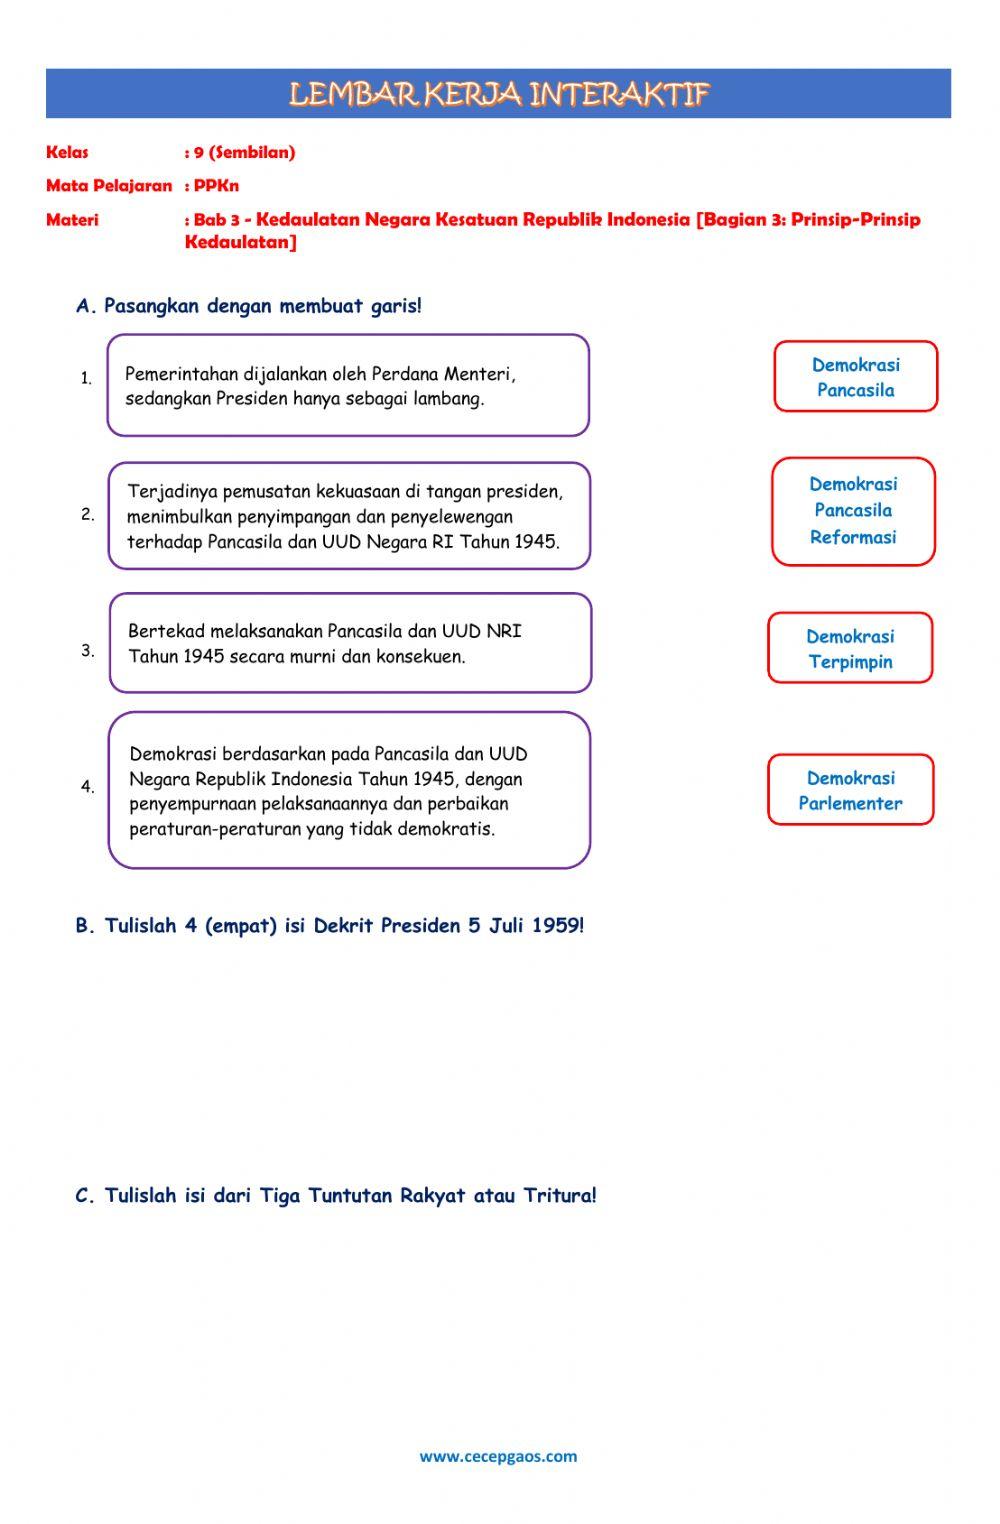 Lembar Kerja Siswa Interaktif PPKn Kelas 9 Bab 3 - Bagian 3: Melaksanakan Prinsip-Prinsip Kedaulatan sesuai dengan Undang-Undang Dasar Negara Republik Indonesia Tahun 1945